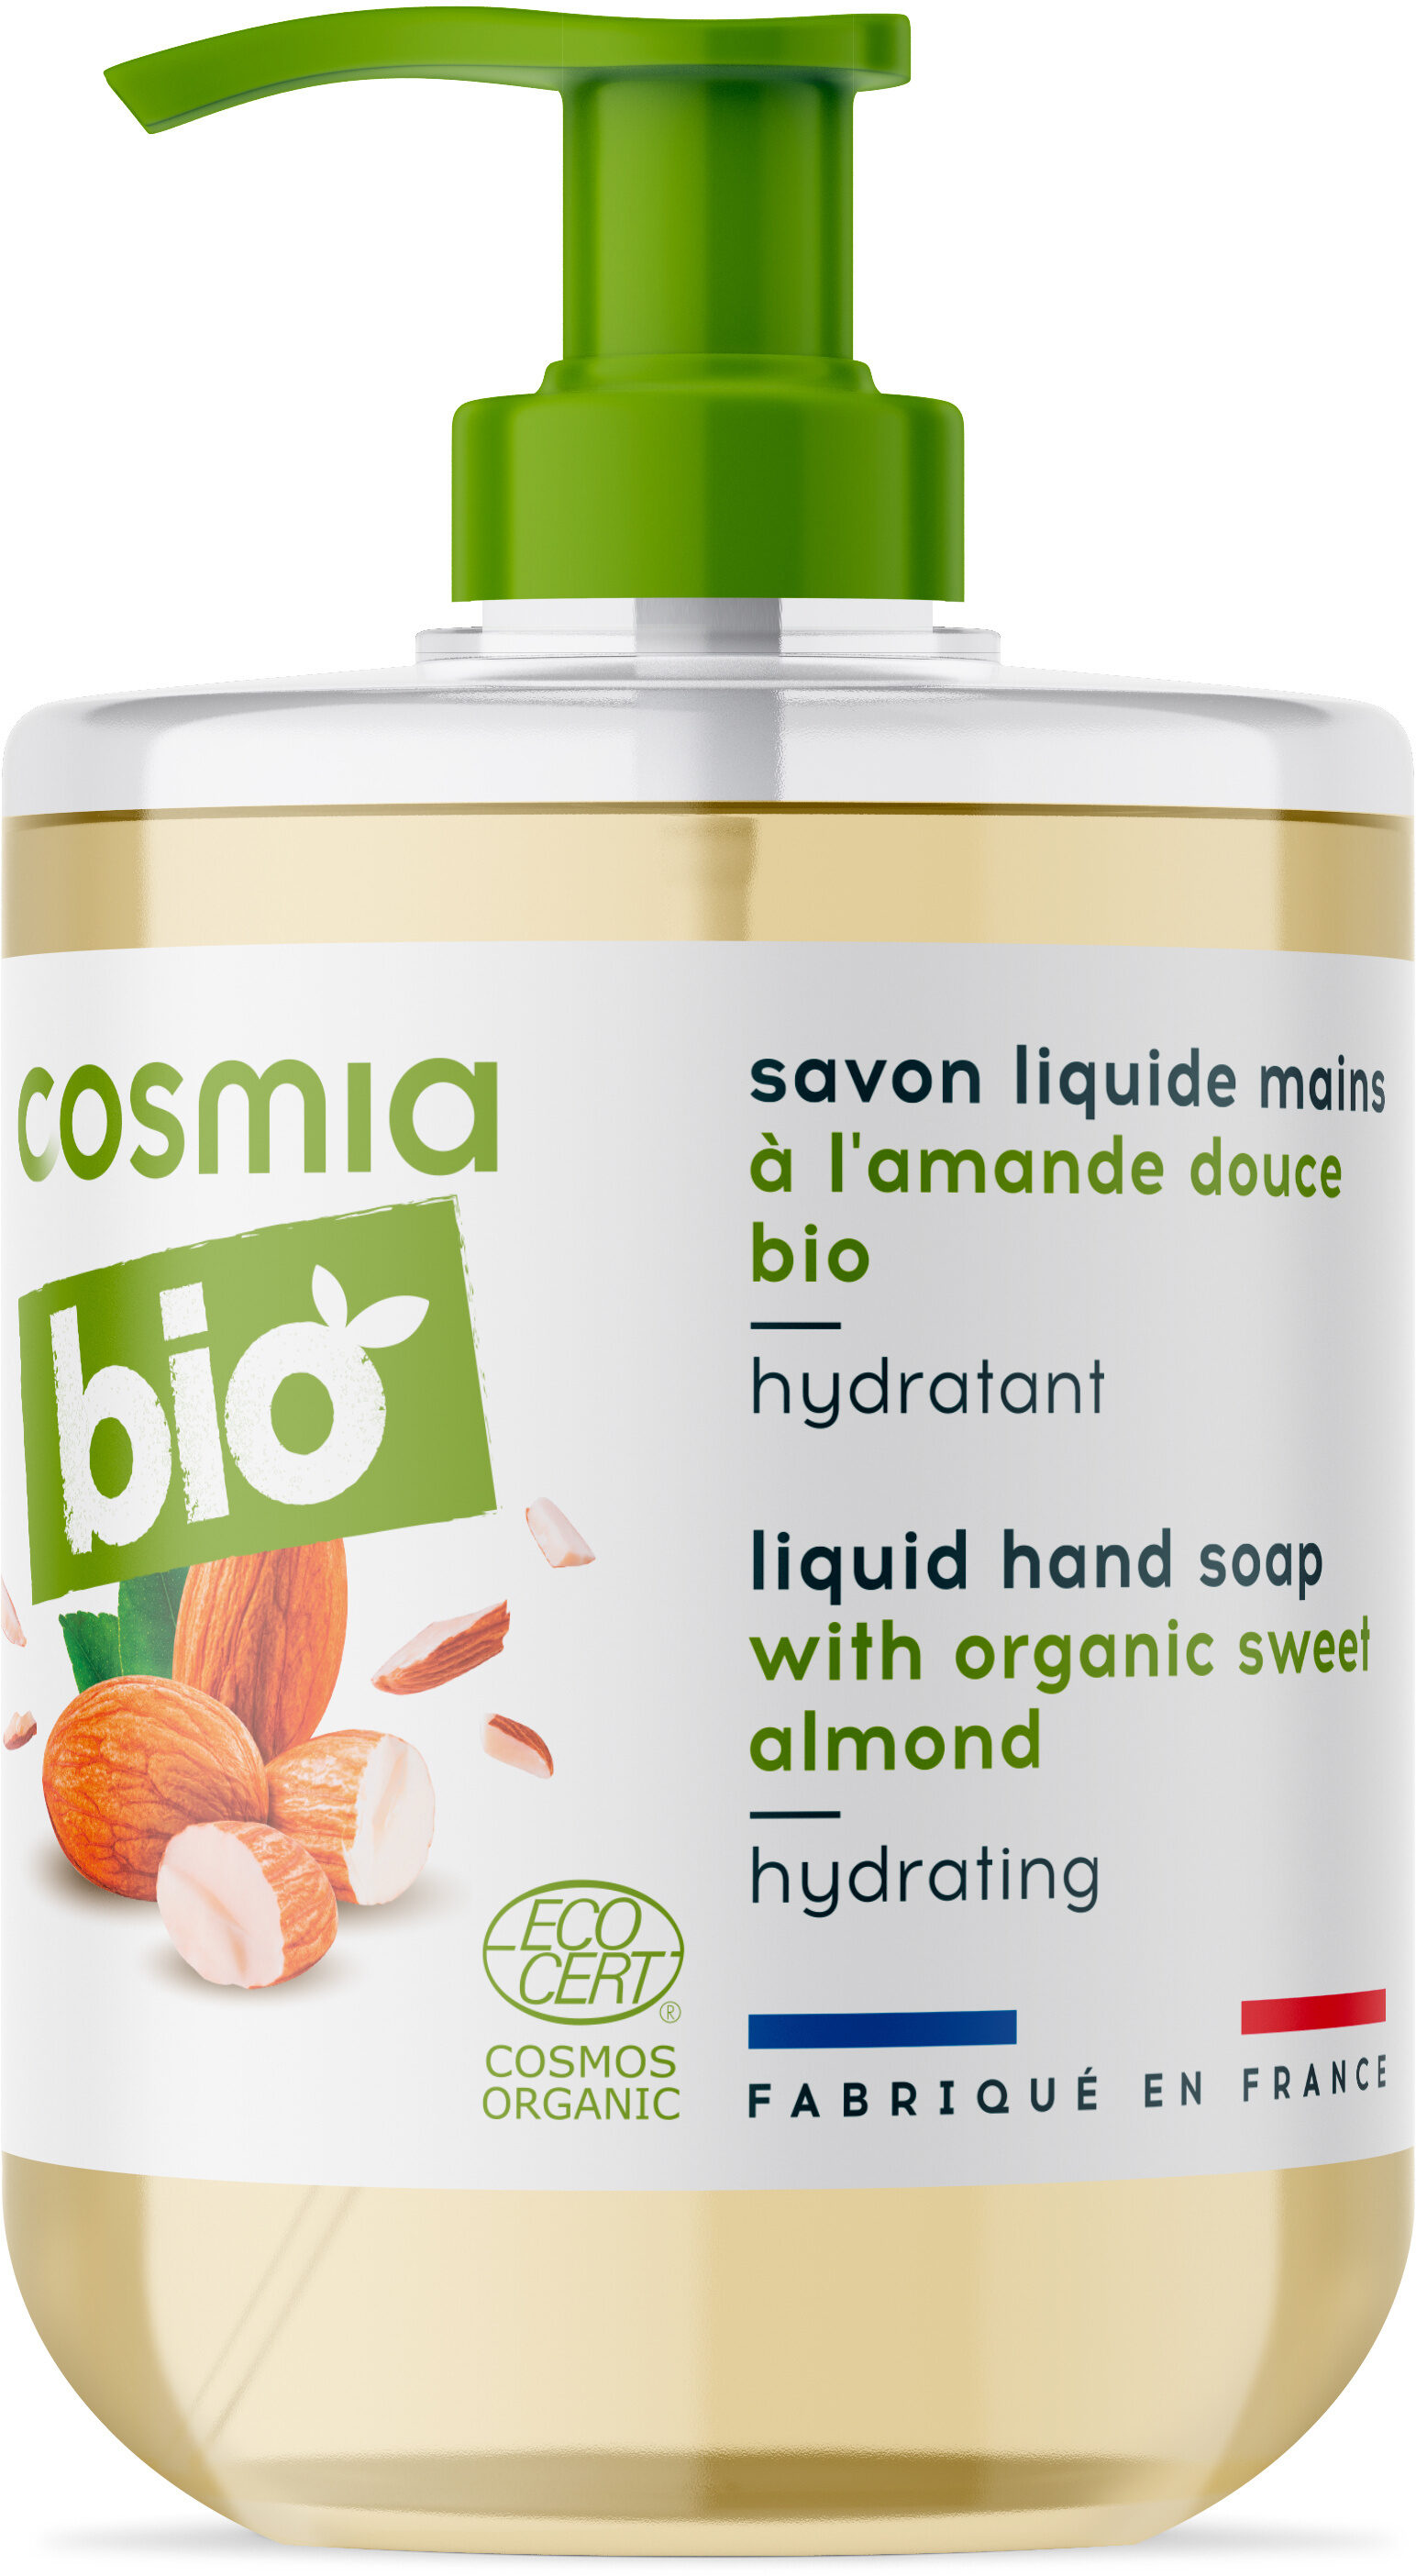 Bio savon liquide mains a l'amande douce bio - Producto - fr